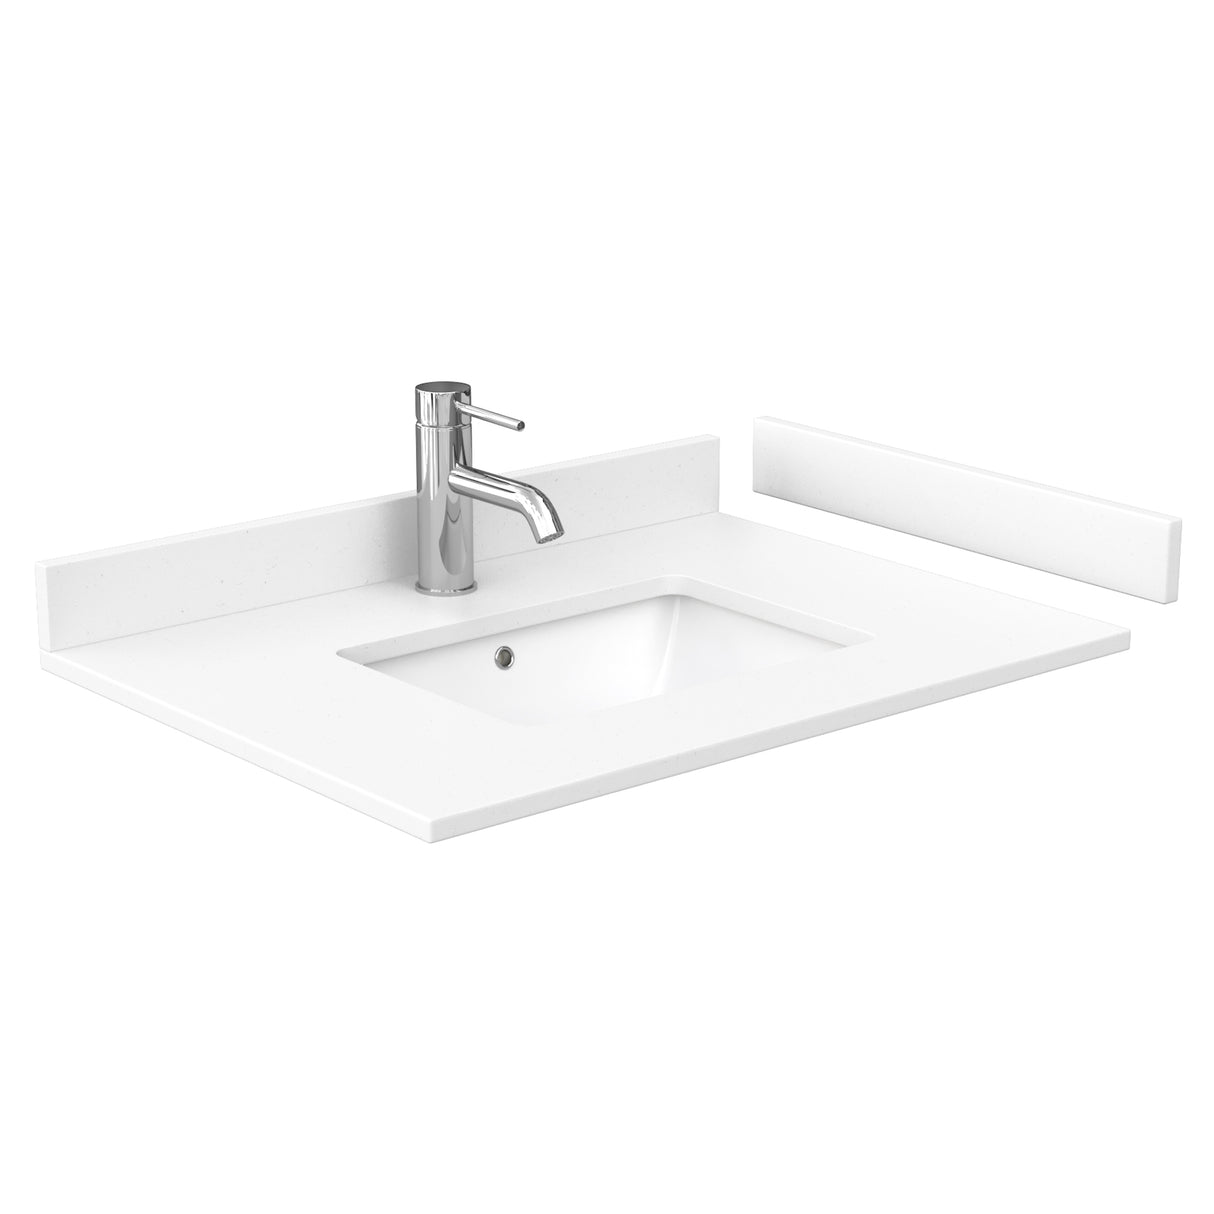 Daria 30 Inch Single Bathroom Vanity in Dark Espresso White Cultured Marble Countertop Undermount Square Sink Medicine Cabinet